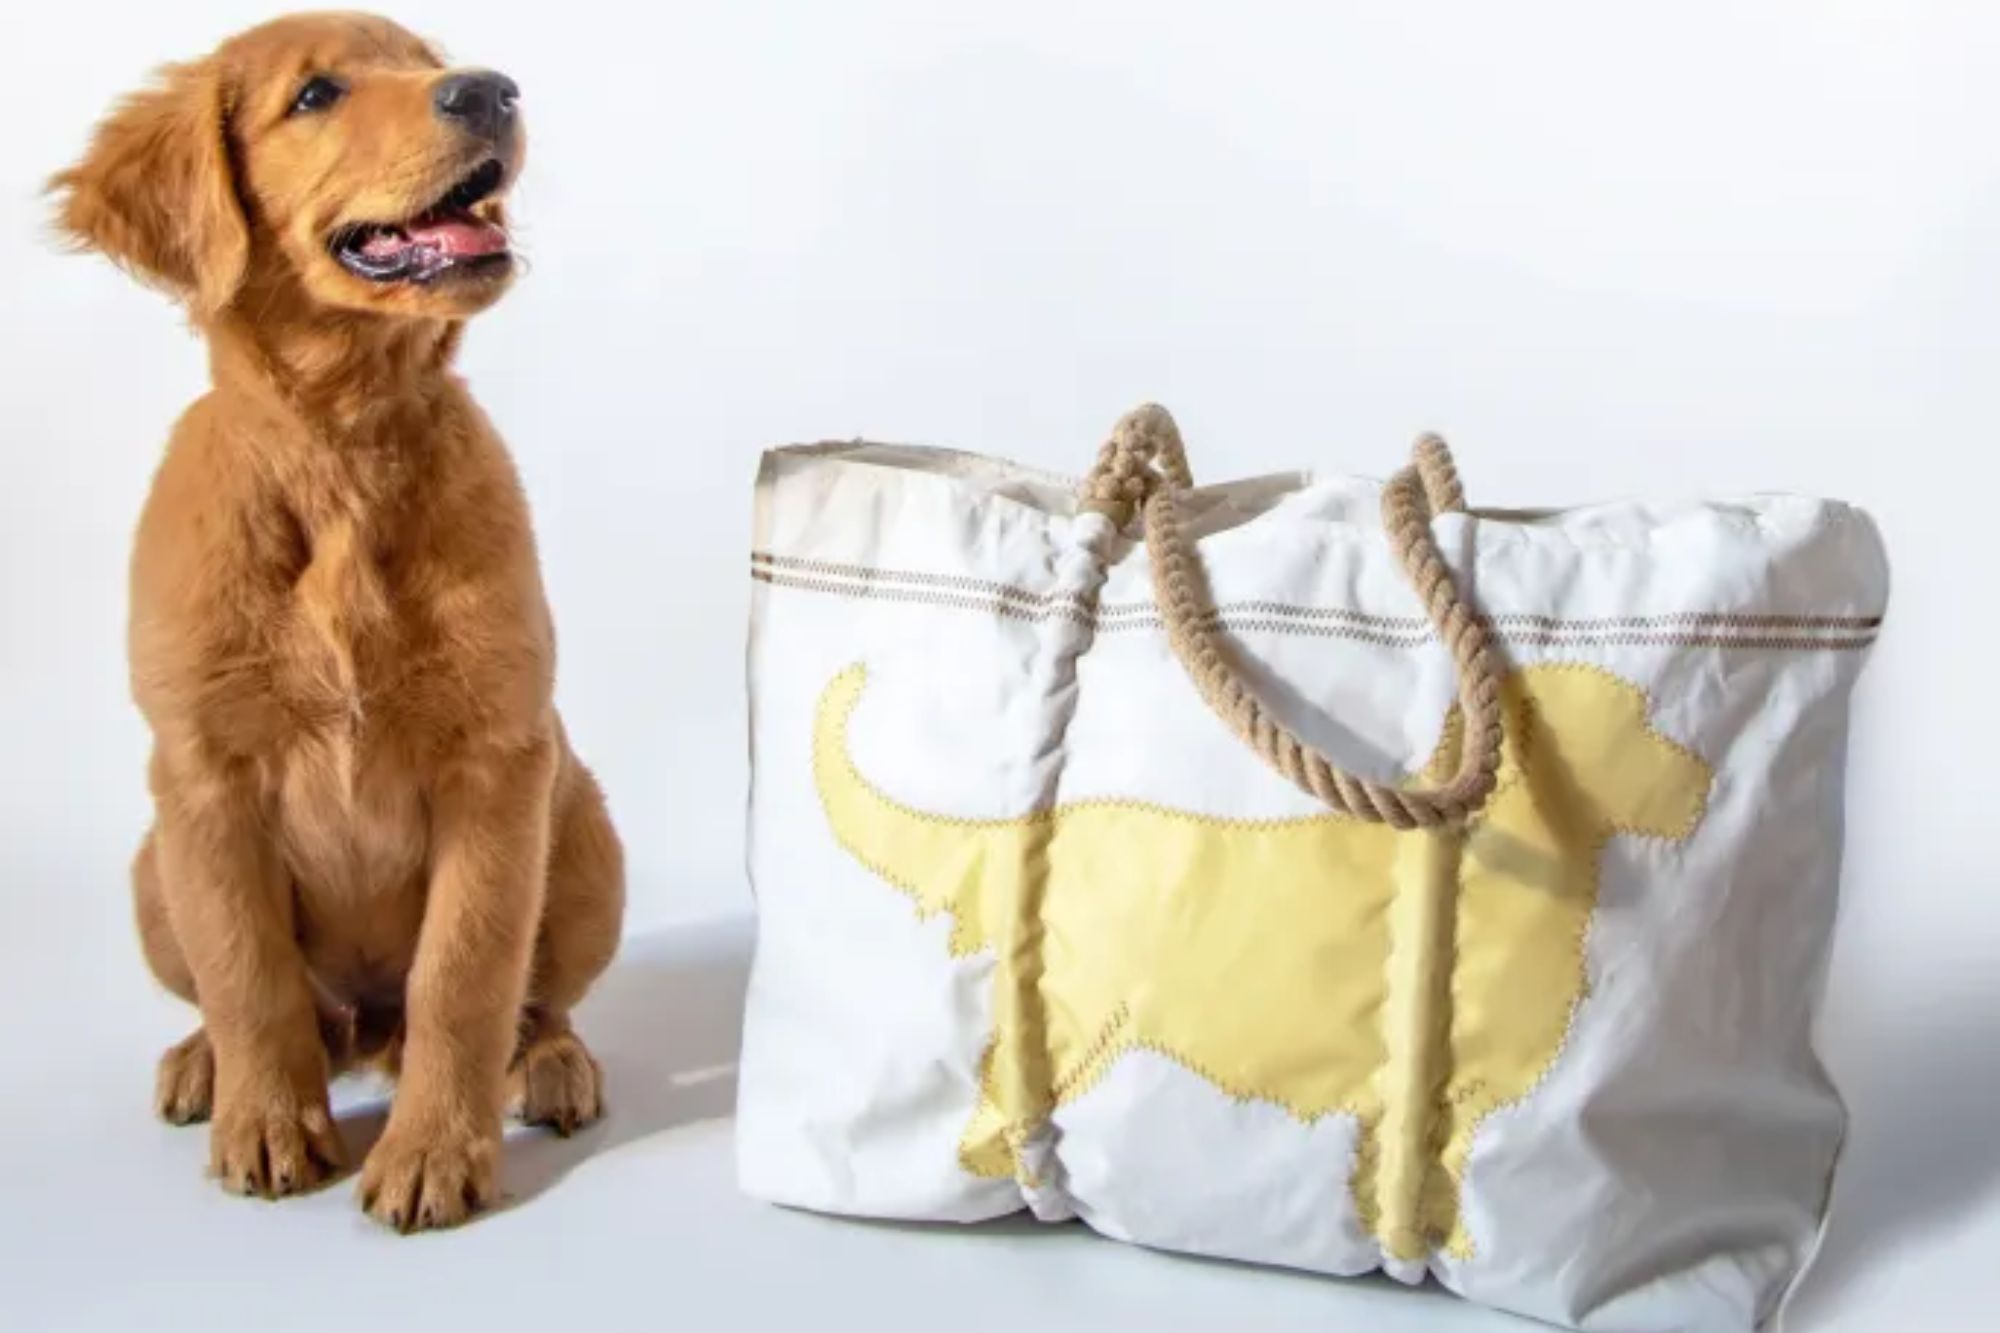 A dog sitting next to a bag